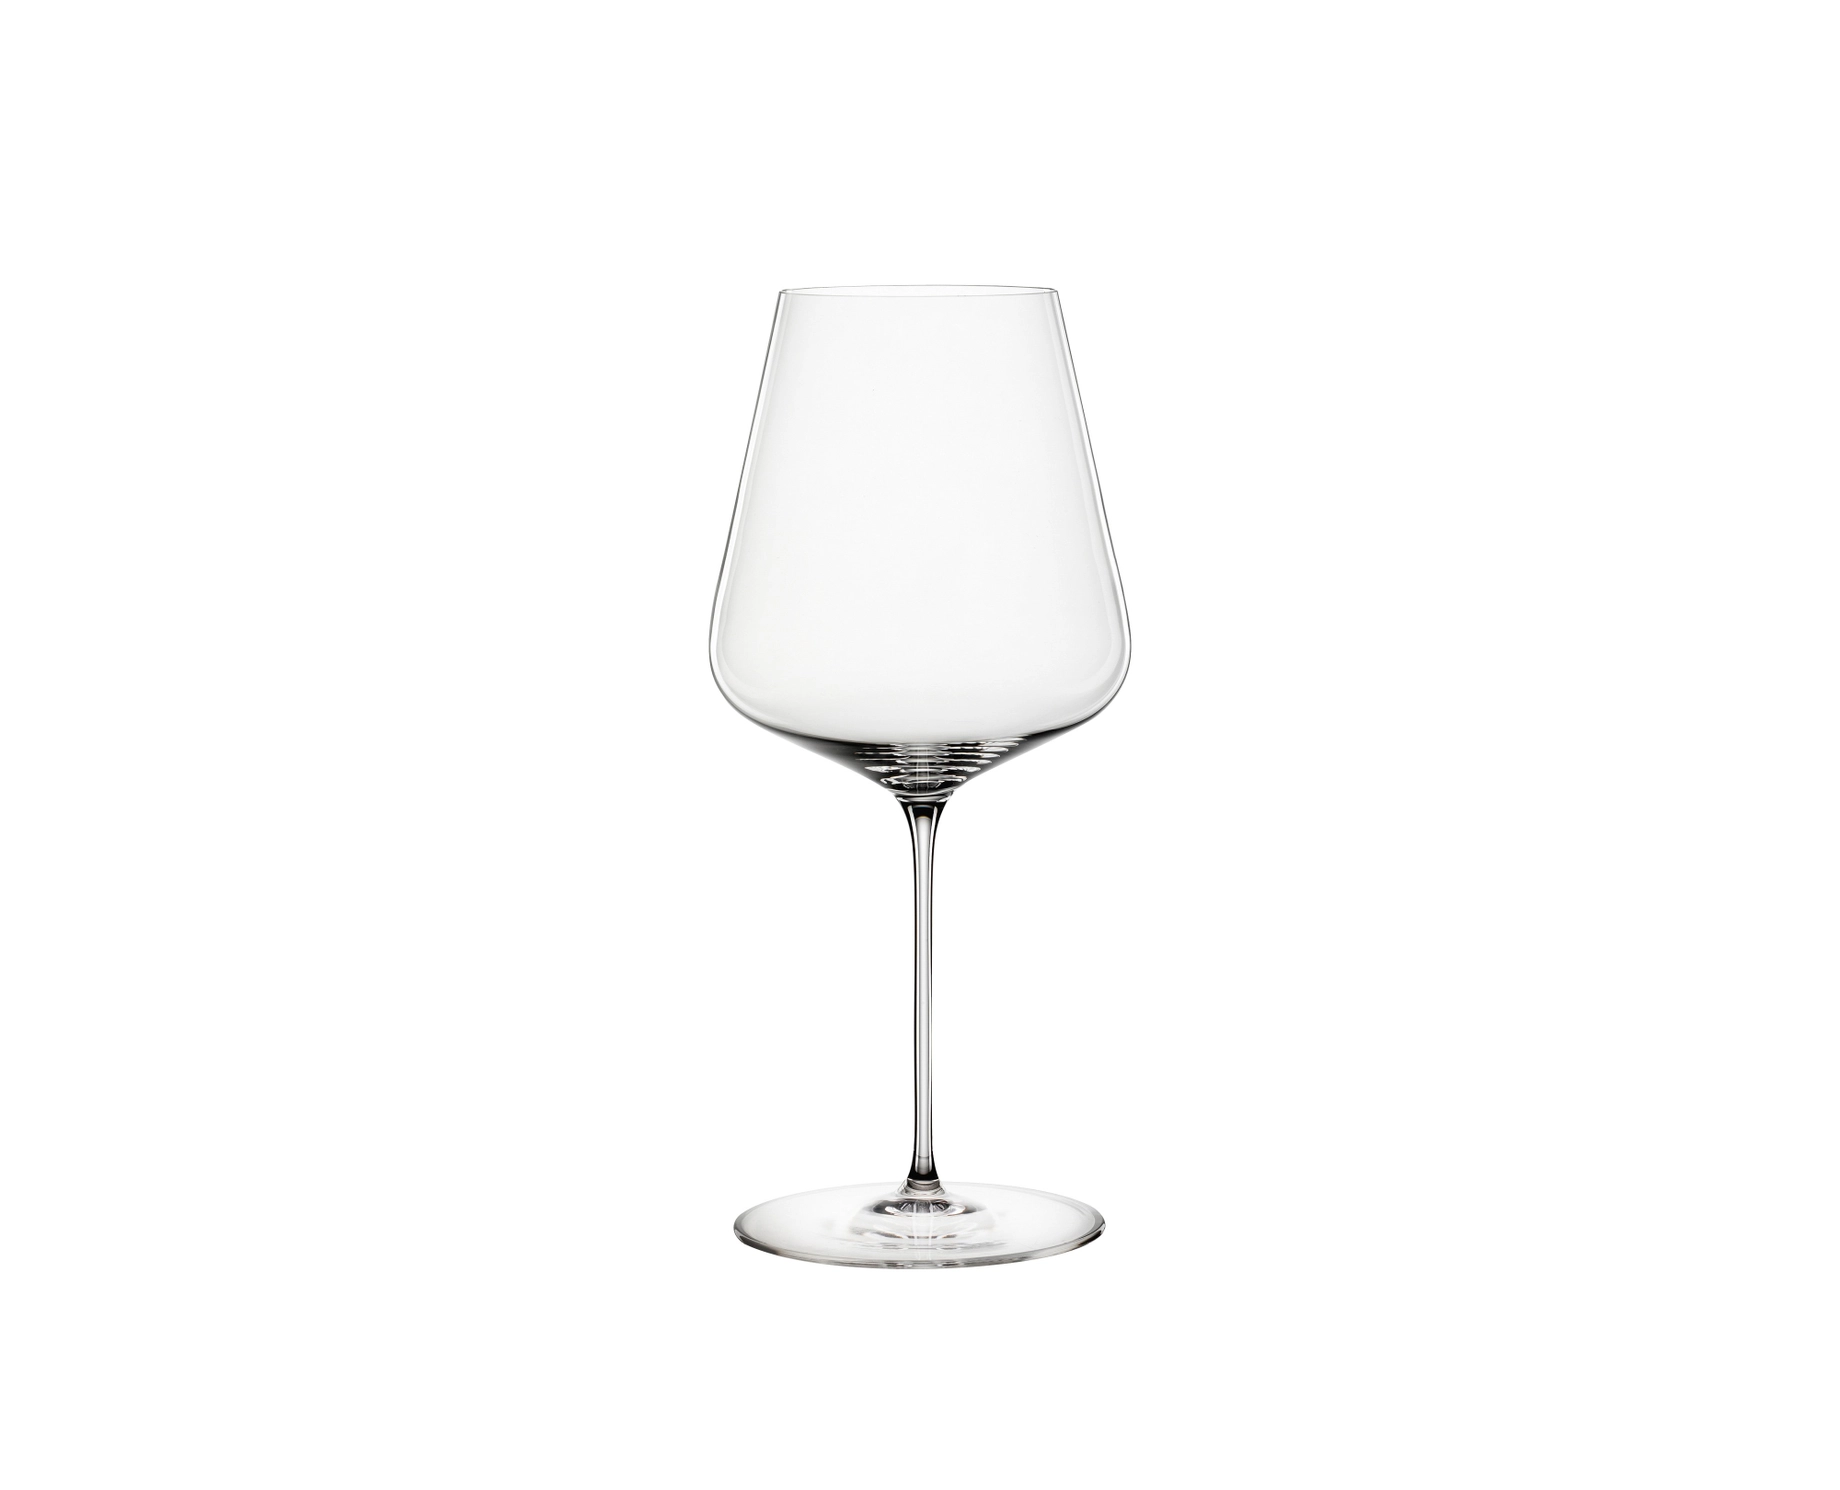 Spiegelau - Definition - Bordeaux glasses- set of 6 in a gift box